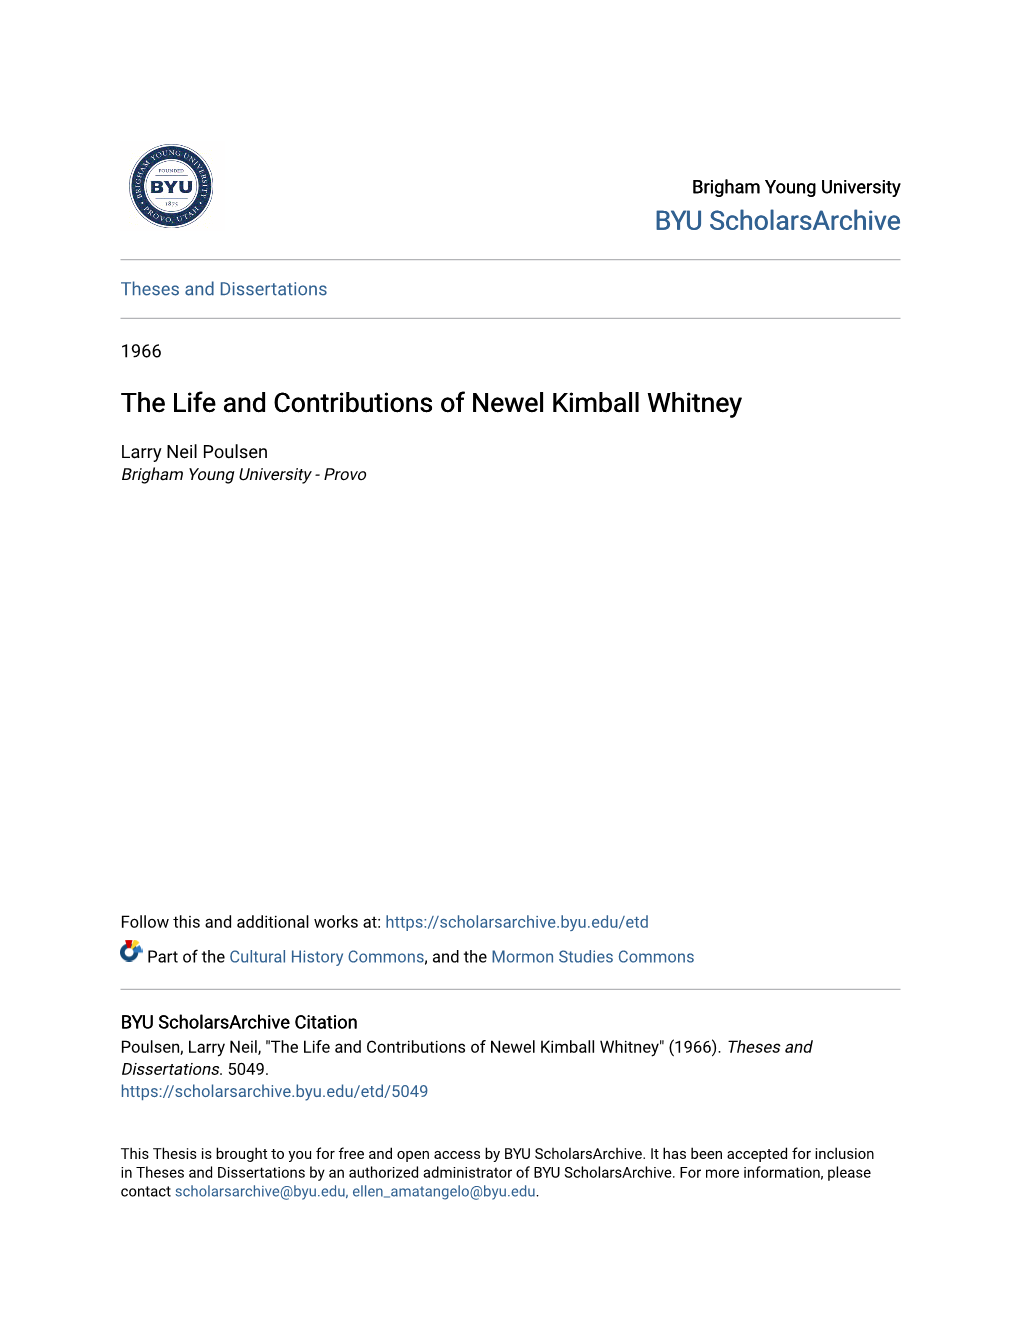 The Life and Contributions of Newel Kimball Whitney